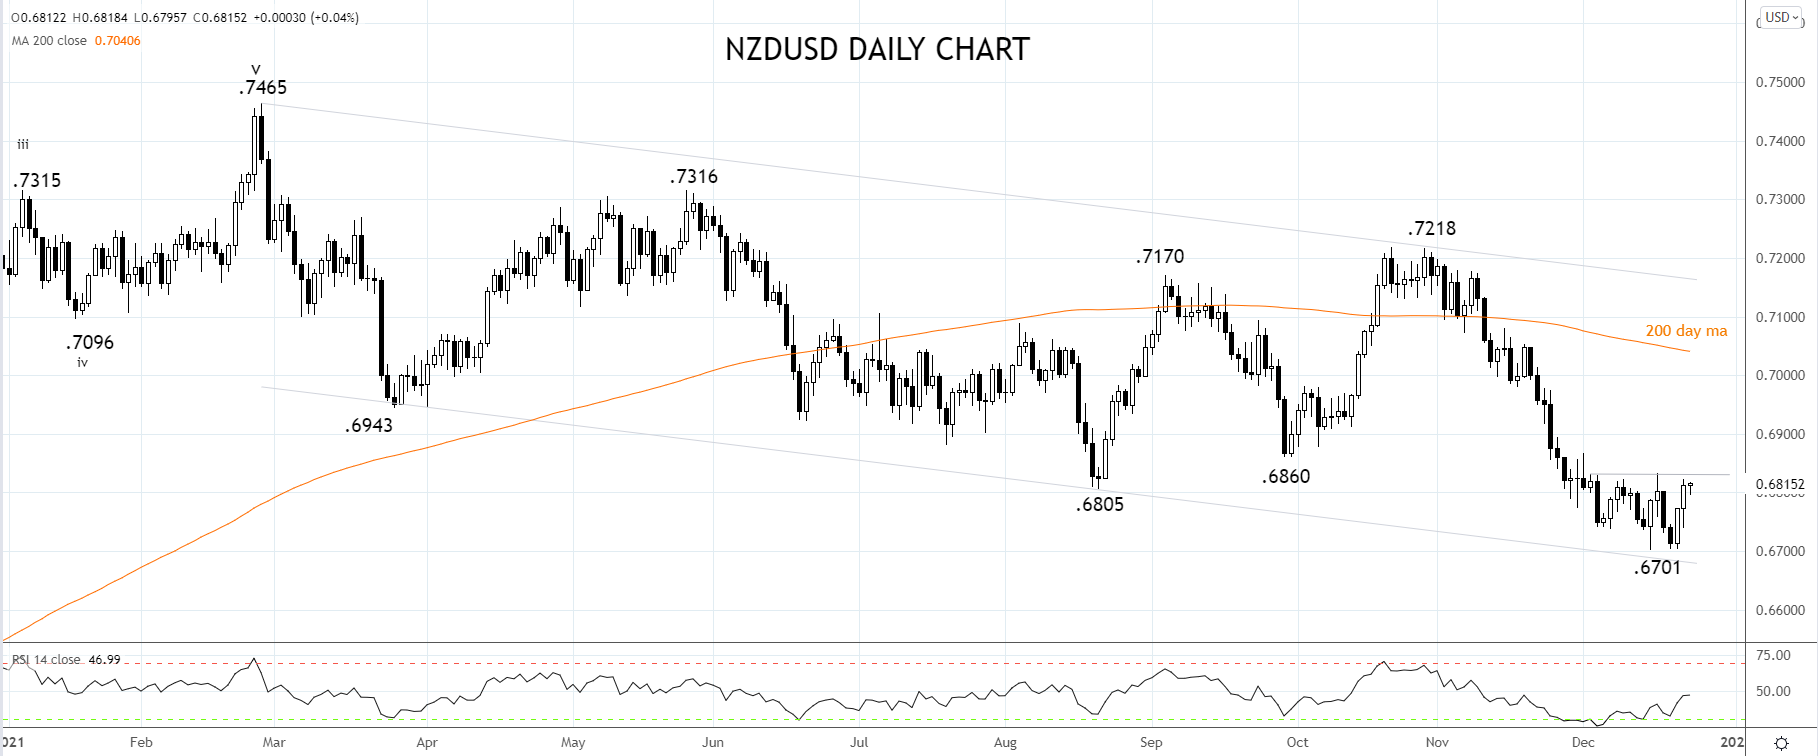 NZDUSD DAILY CHART 23RD OF DEC